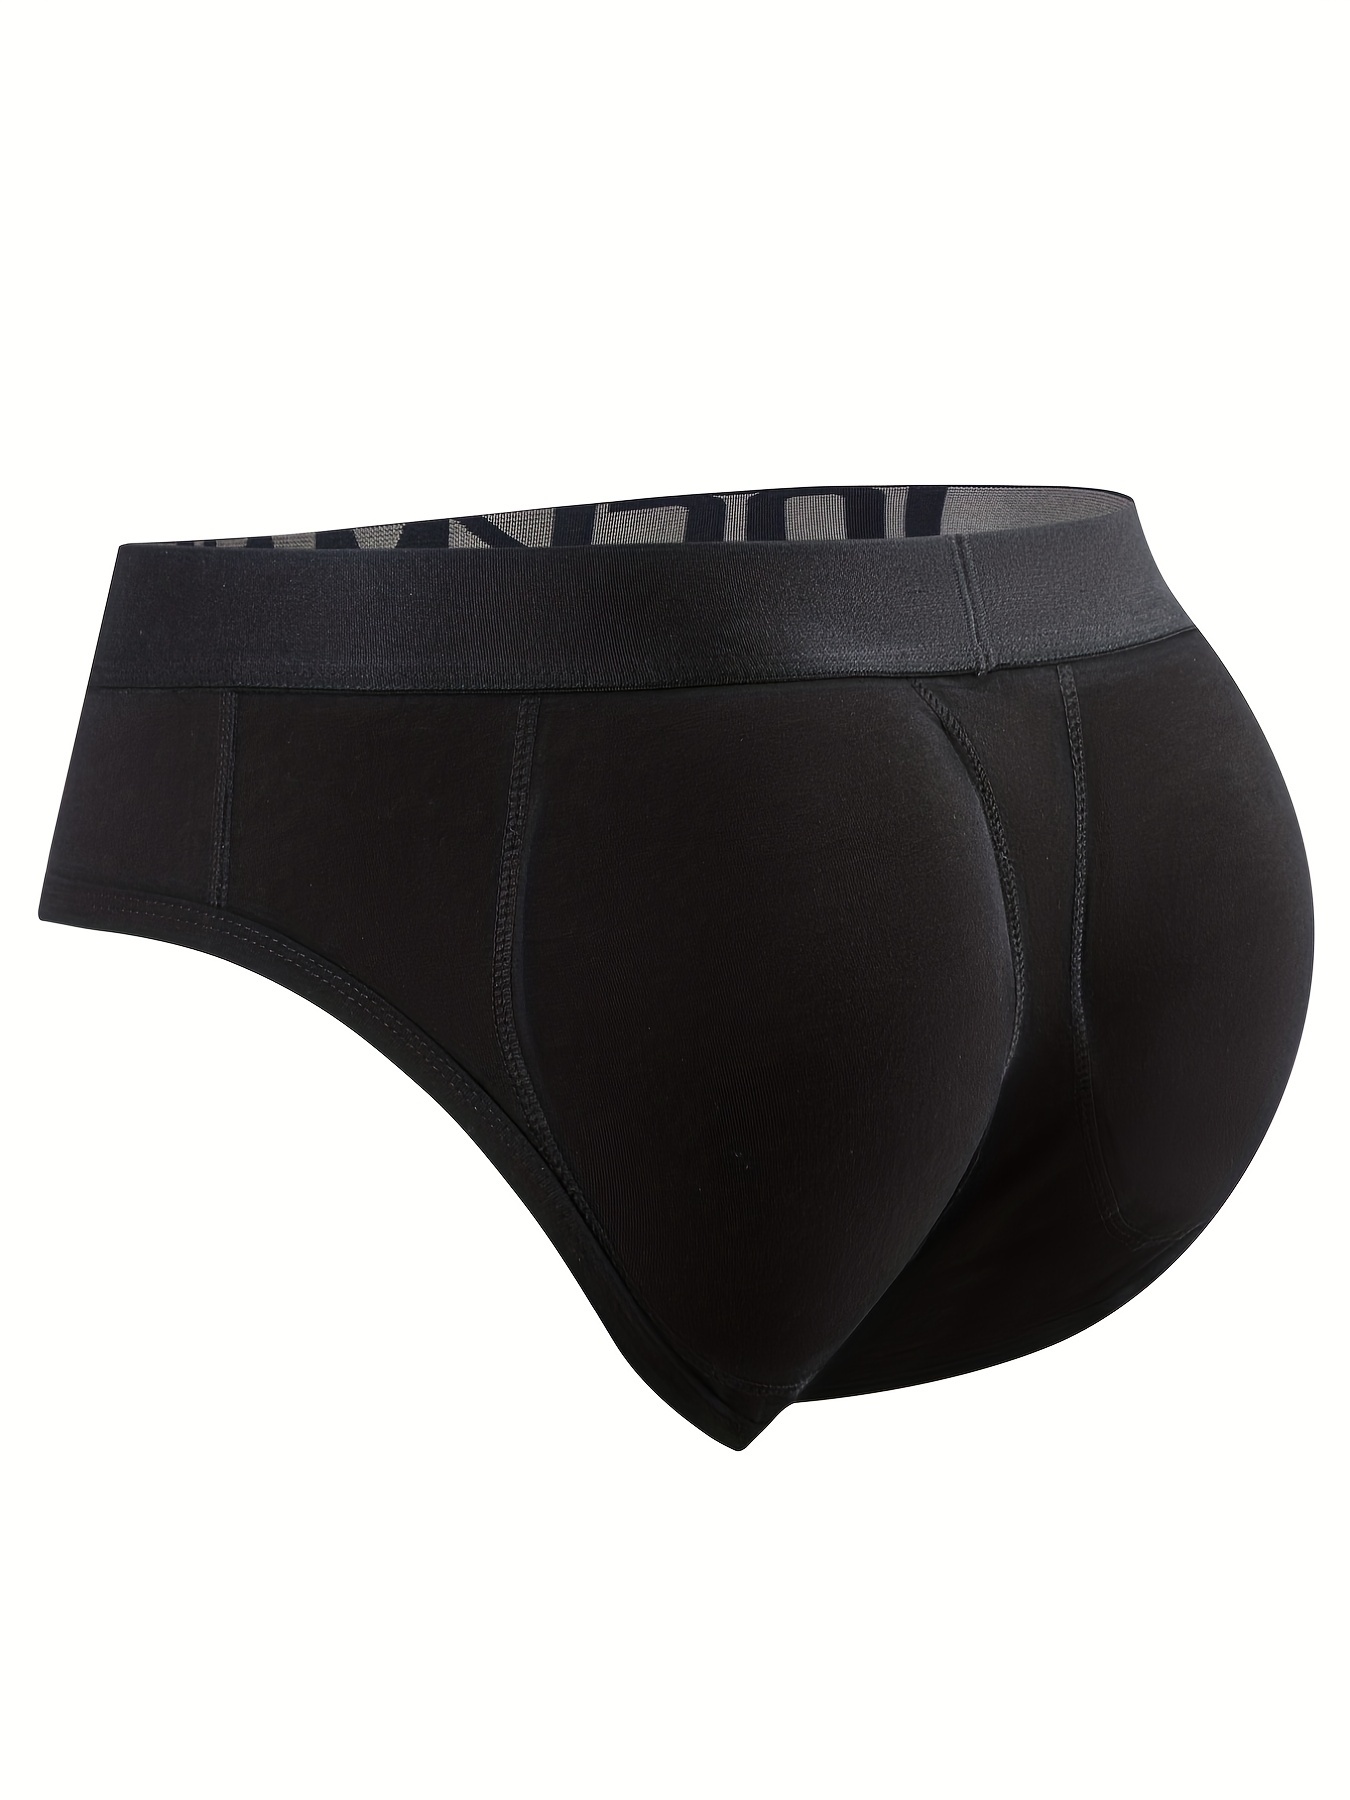 MENS PADDED BUTT Lifter Hip Enhancer Underwear Panties 4 Removable